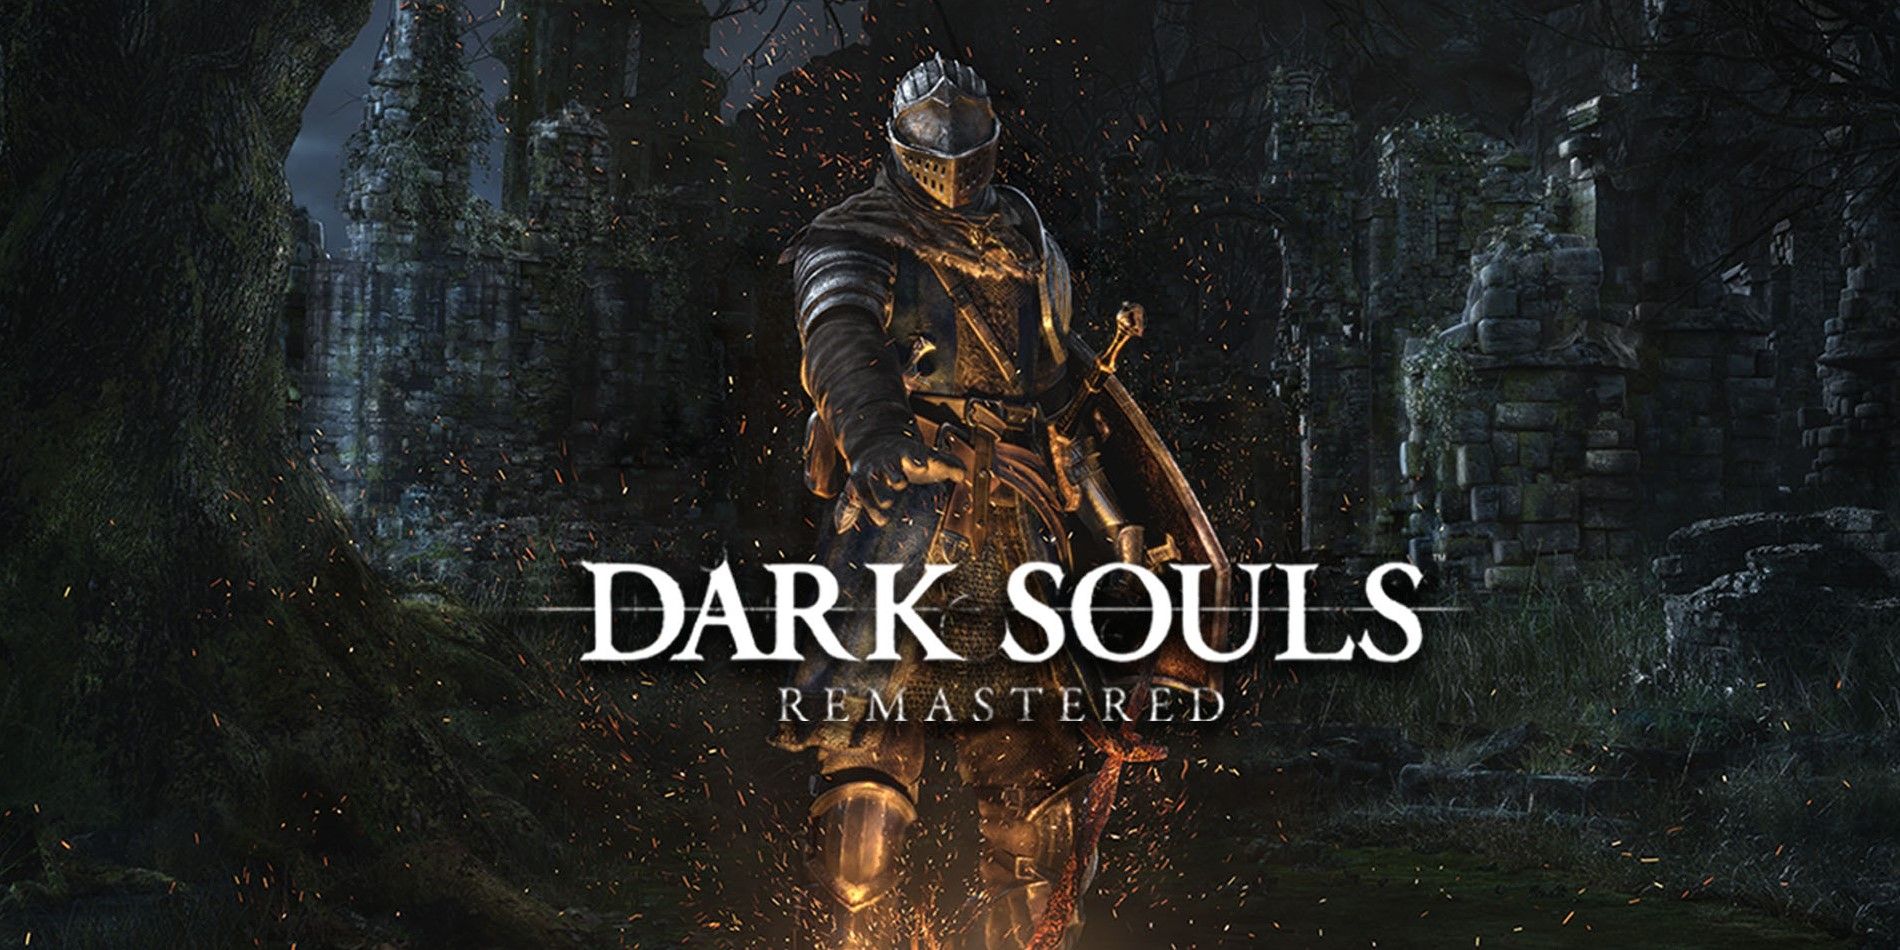 Dark Souls remastered knight lighting fire banner.